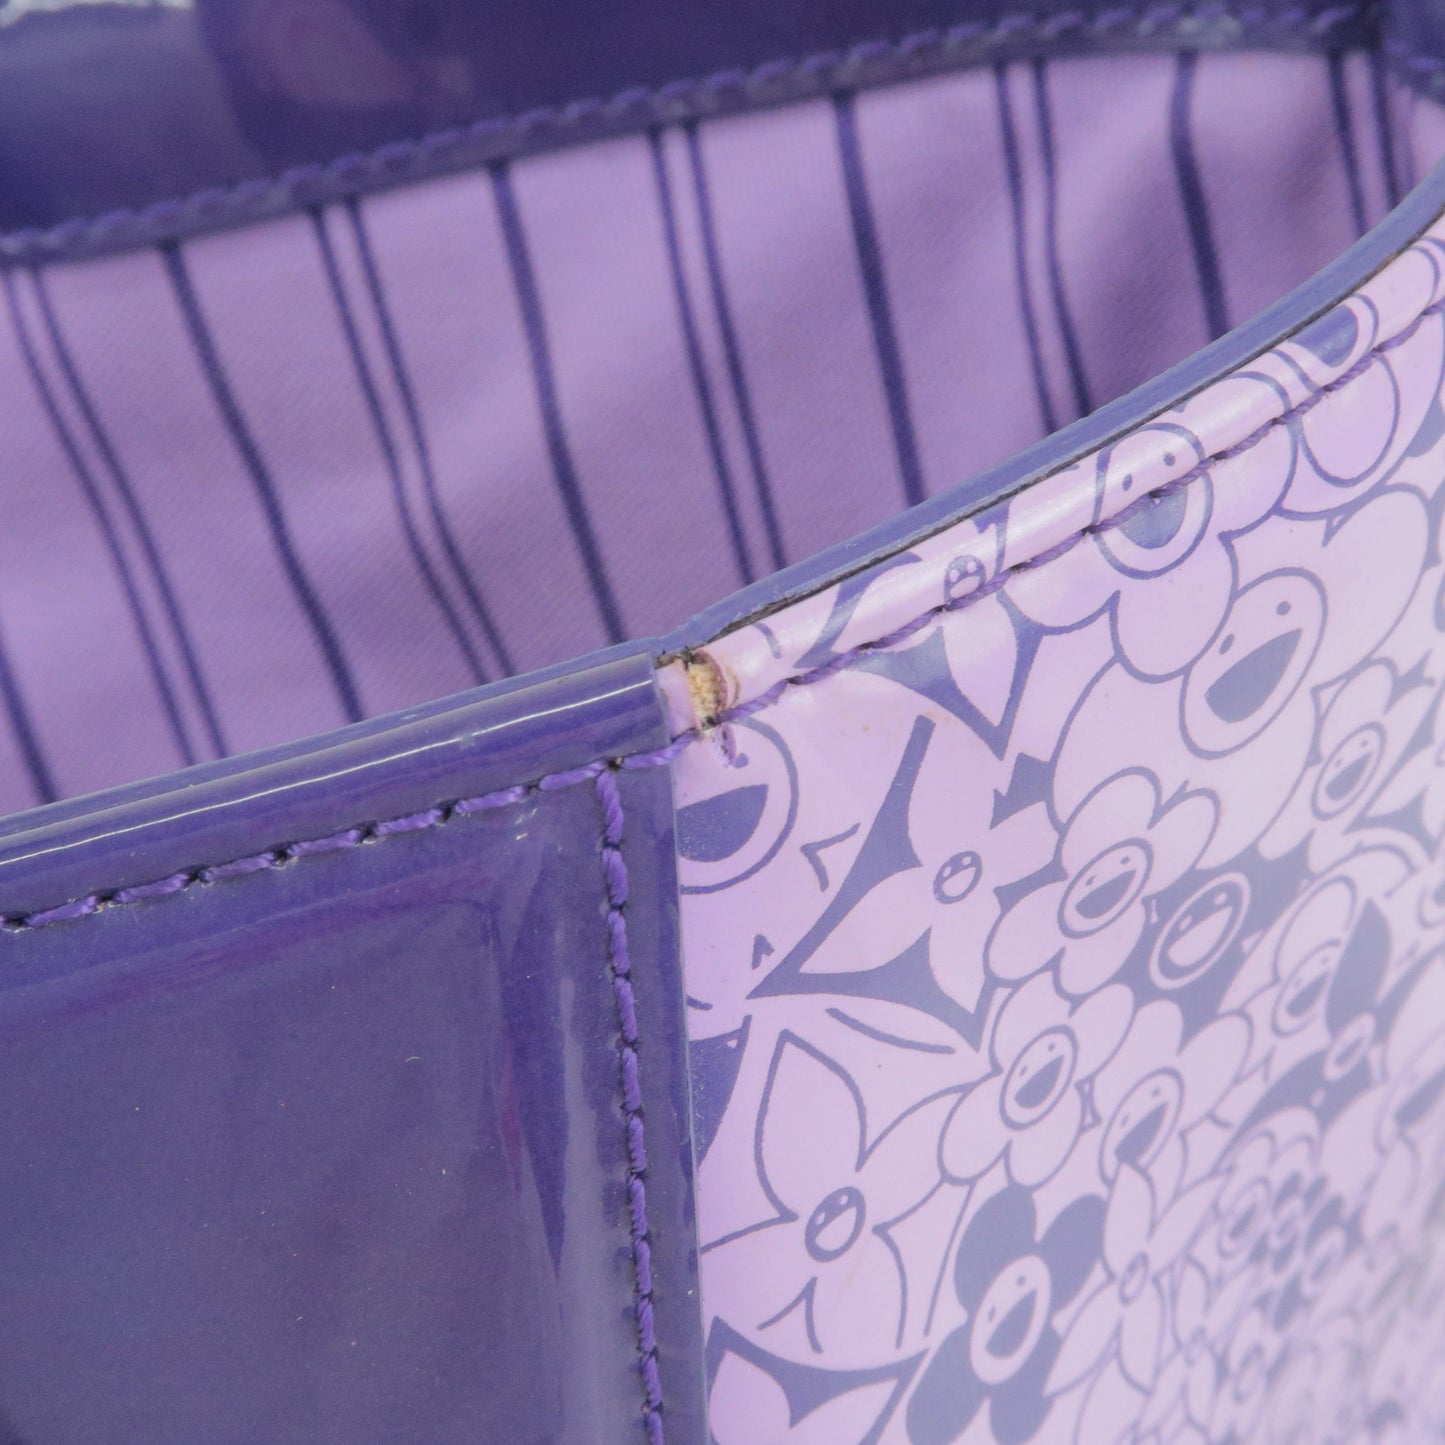 Louis Vuitton Beach Line Cosmic Blossom PM Tote Bag M93162 Violet